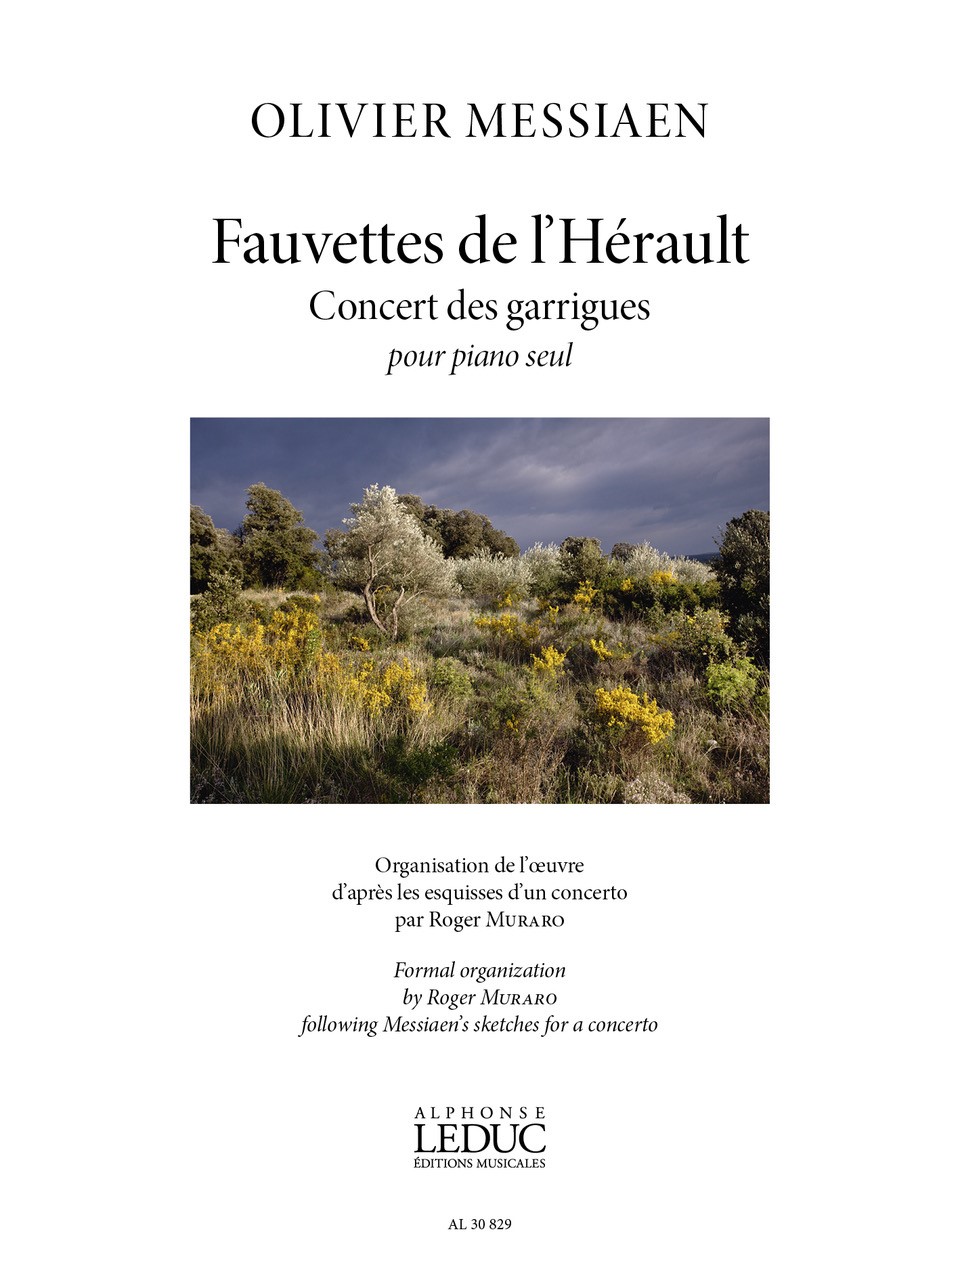 Olivier Messiaen: Les Fauvettes de l'Hérault - Concert des Garrigues: Piano: